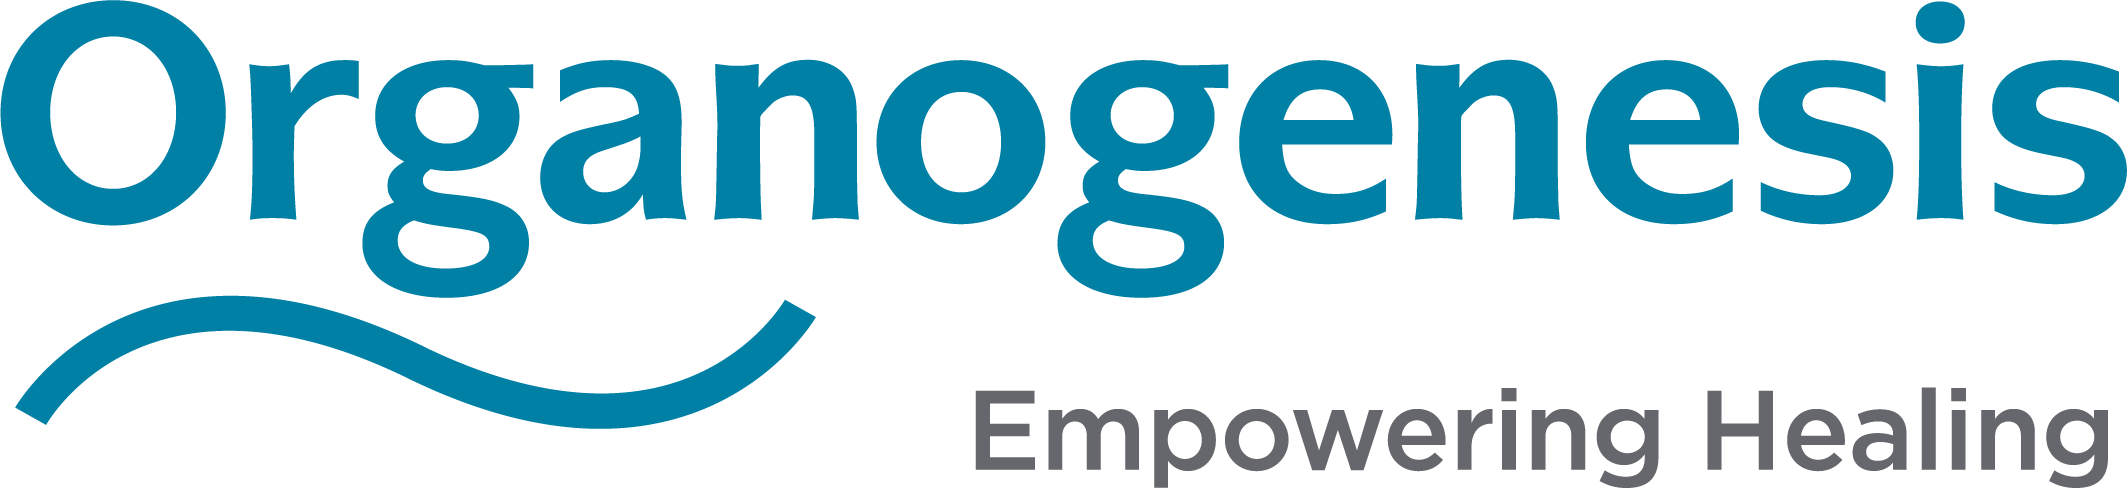 Organogenesis logo